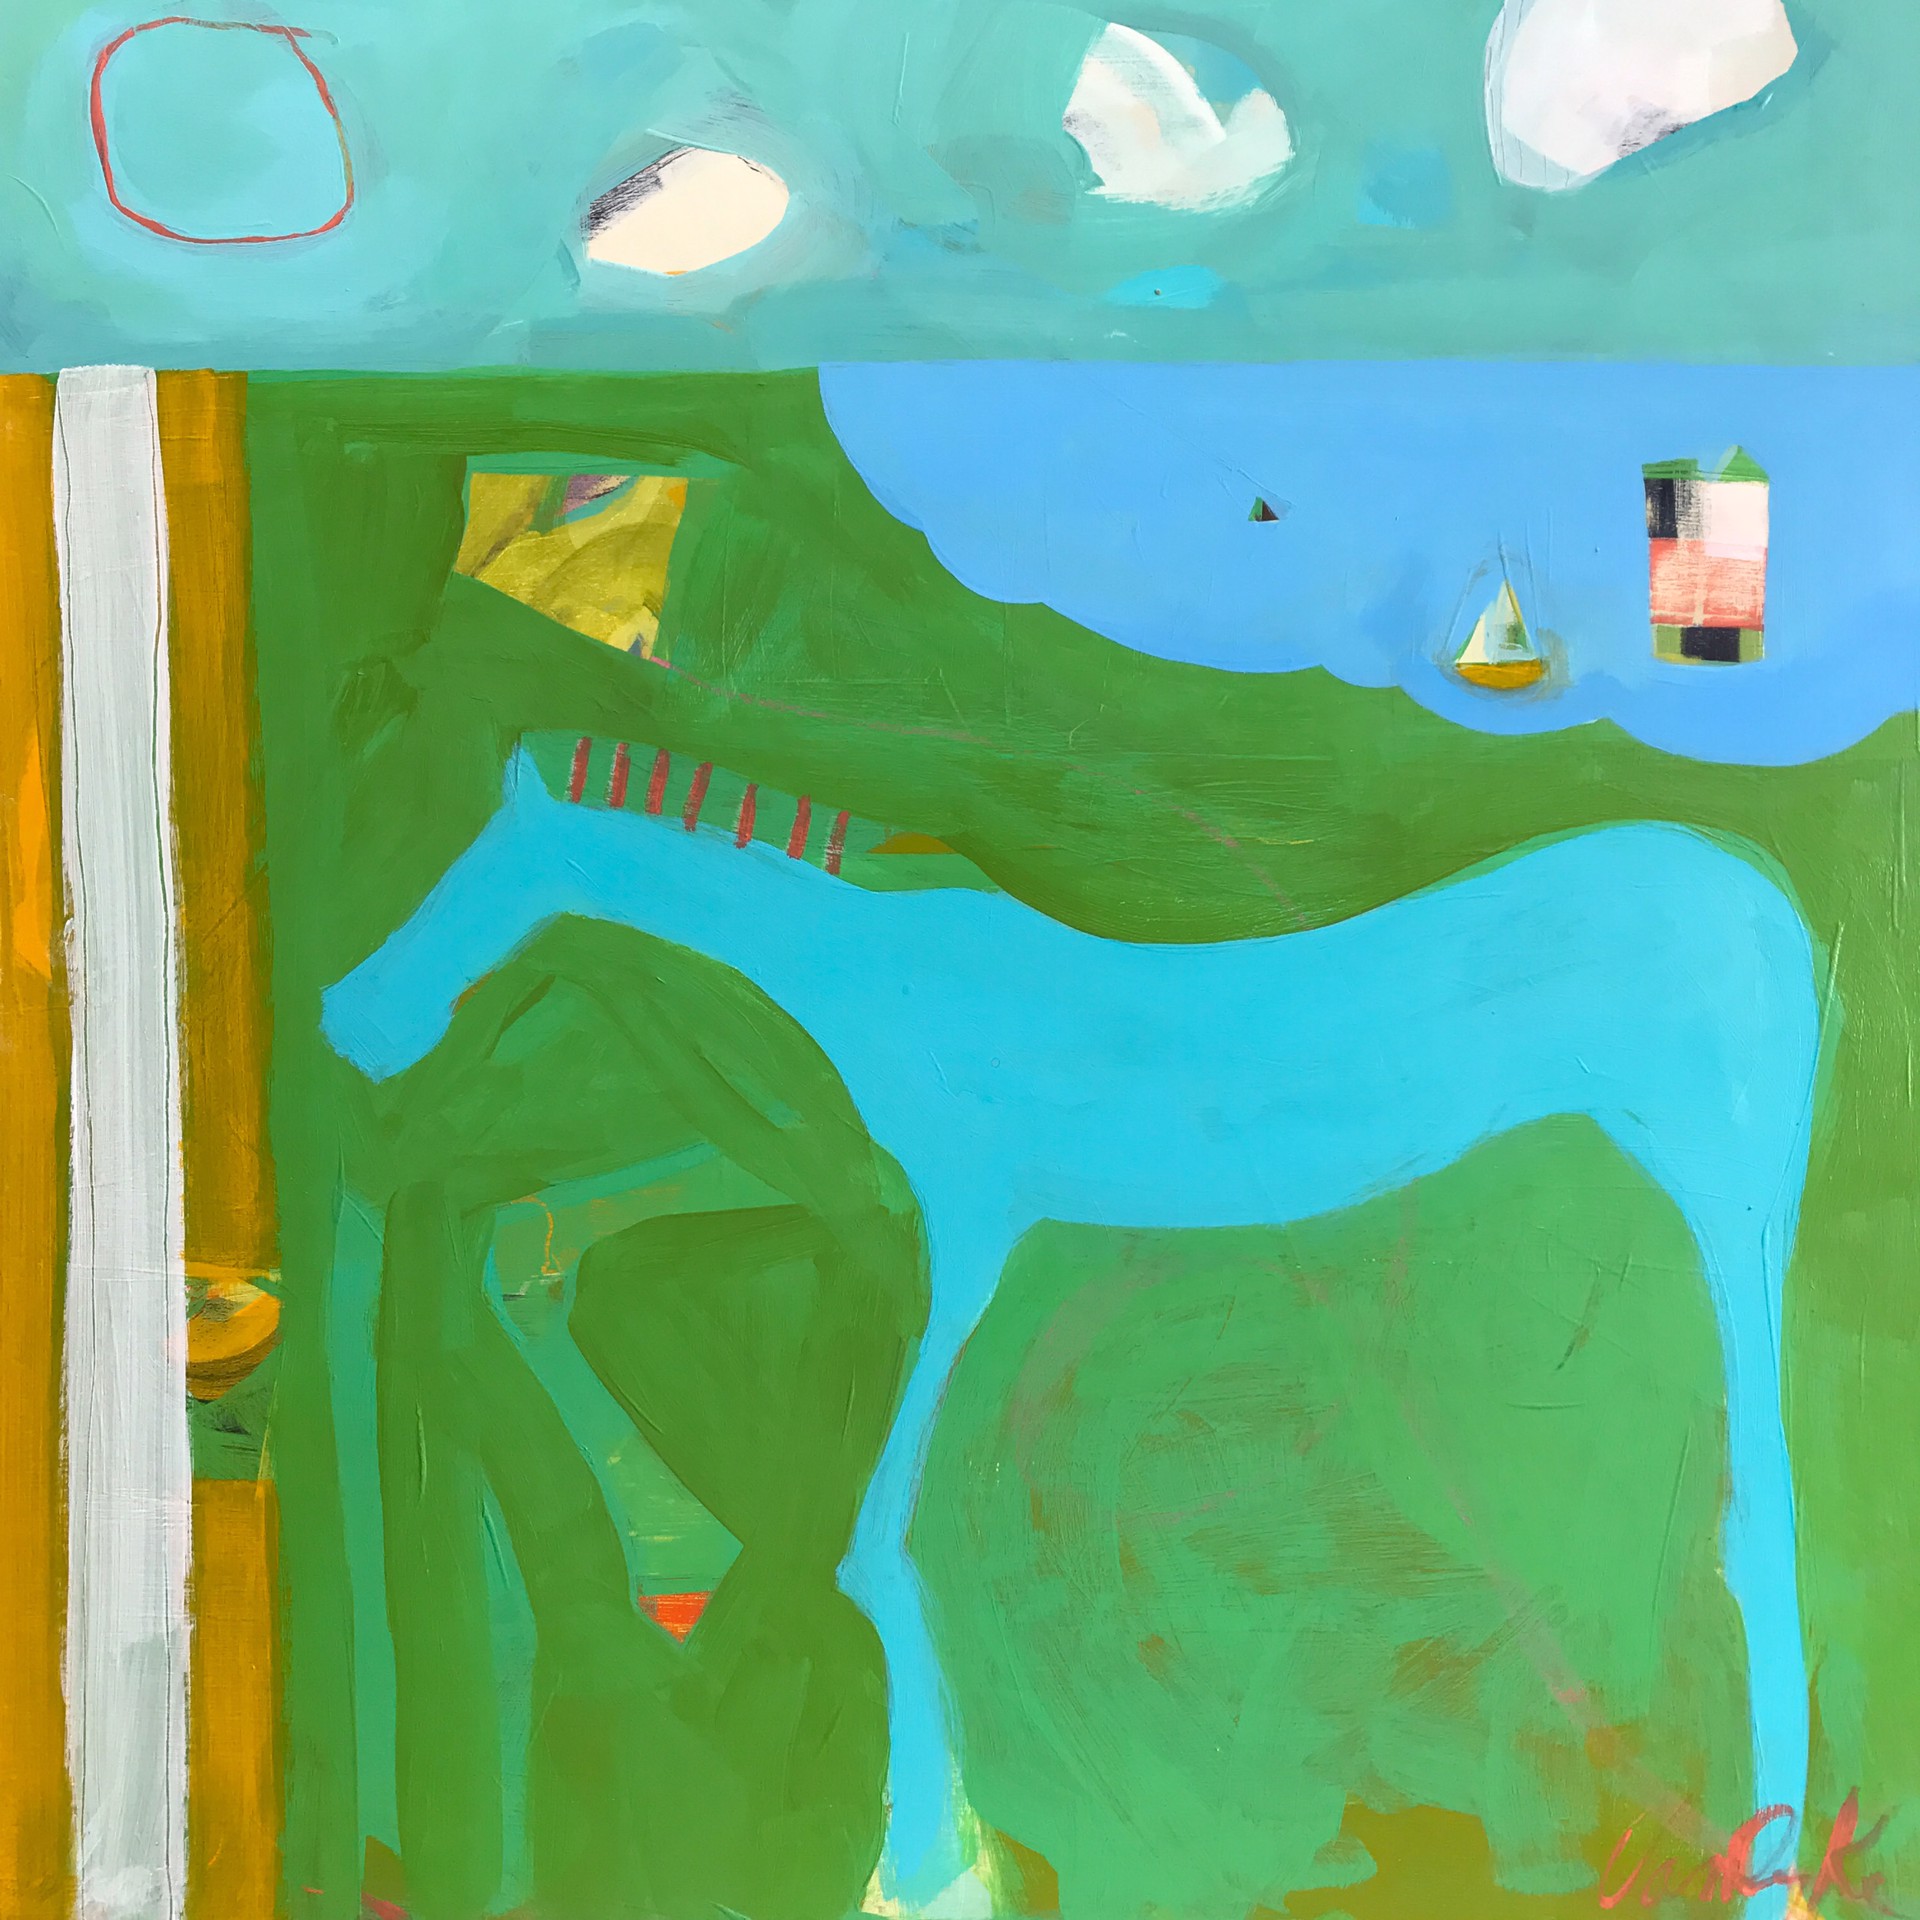 Blue Horse, Kite and Lighthouse by Rachael Van Dyke